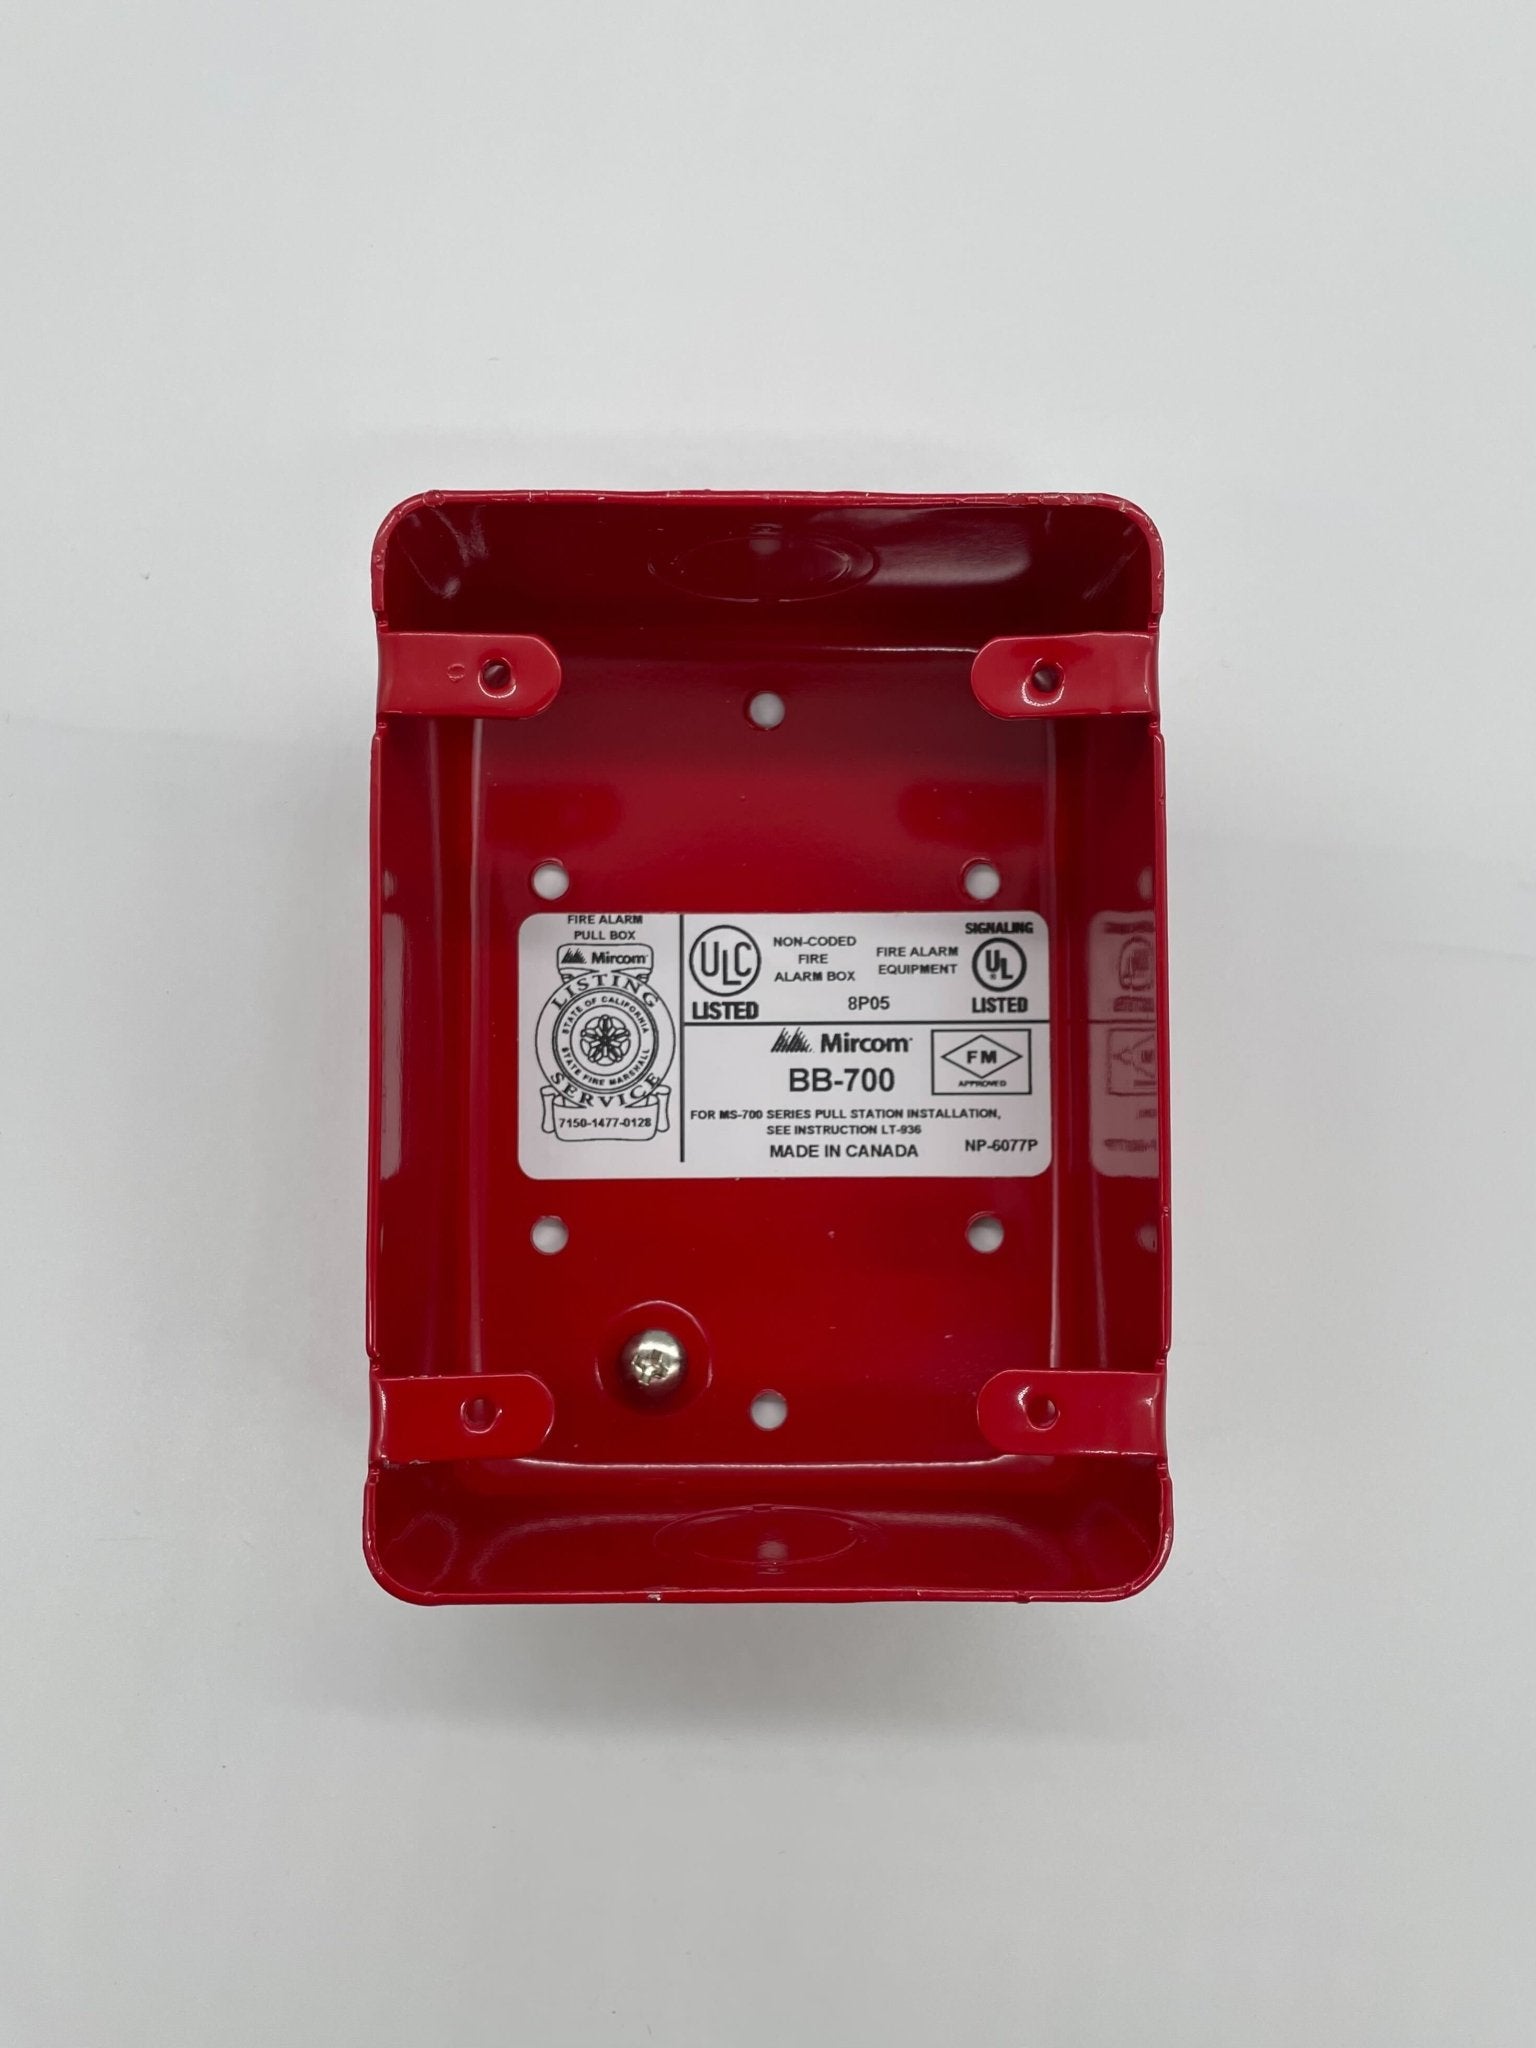 Mircom BB-700 - The Fire Alarm Supplier